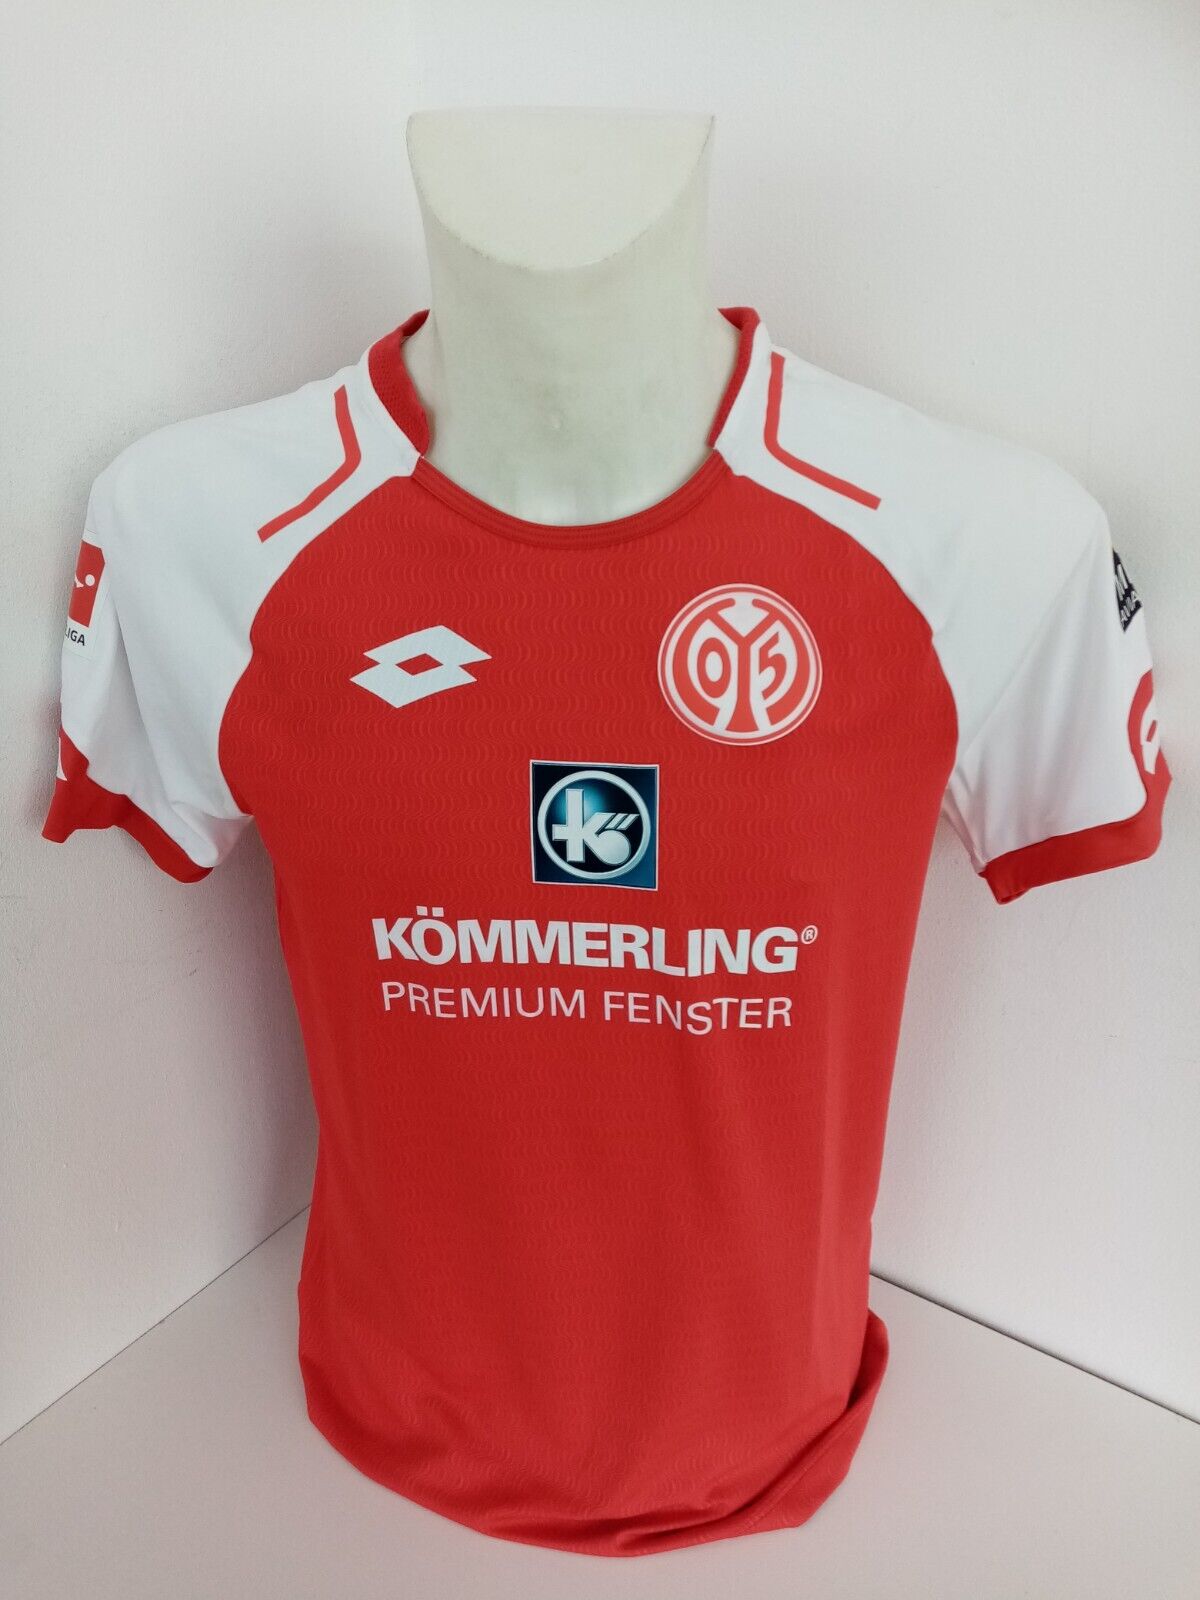 FSV Mainz 05 Trikot Leon Balogun signiert Neu Bundesliga Autogramm Lotto 170-176